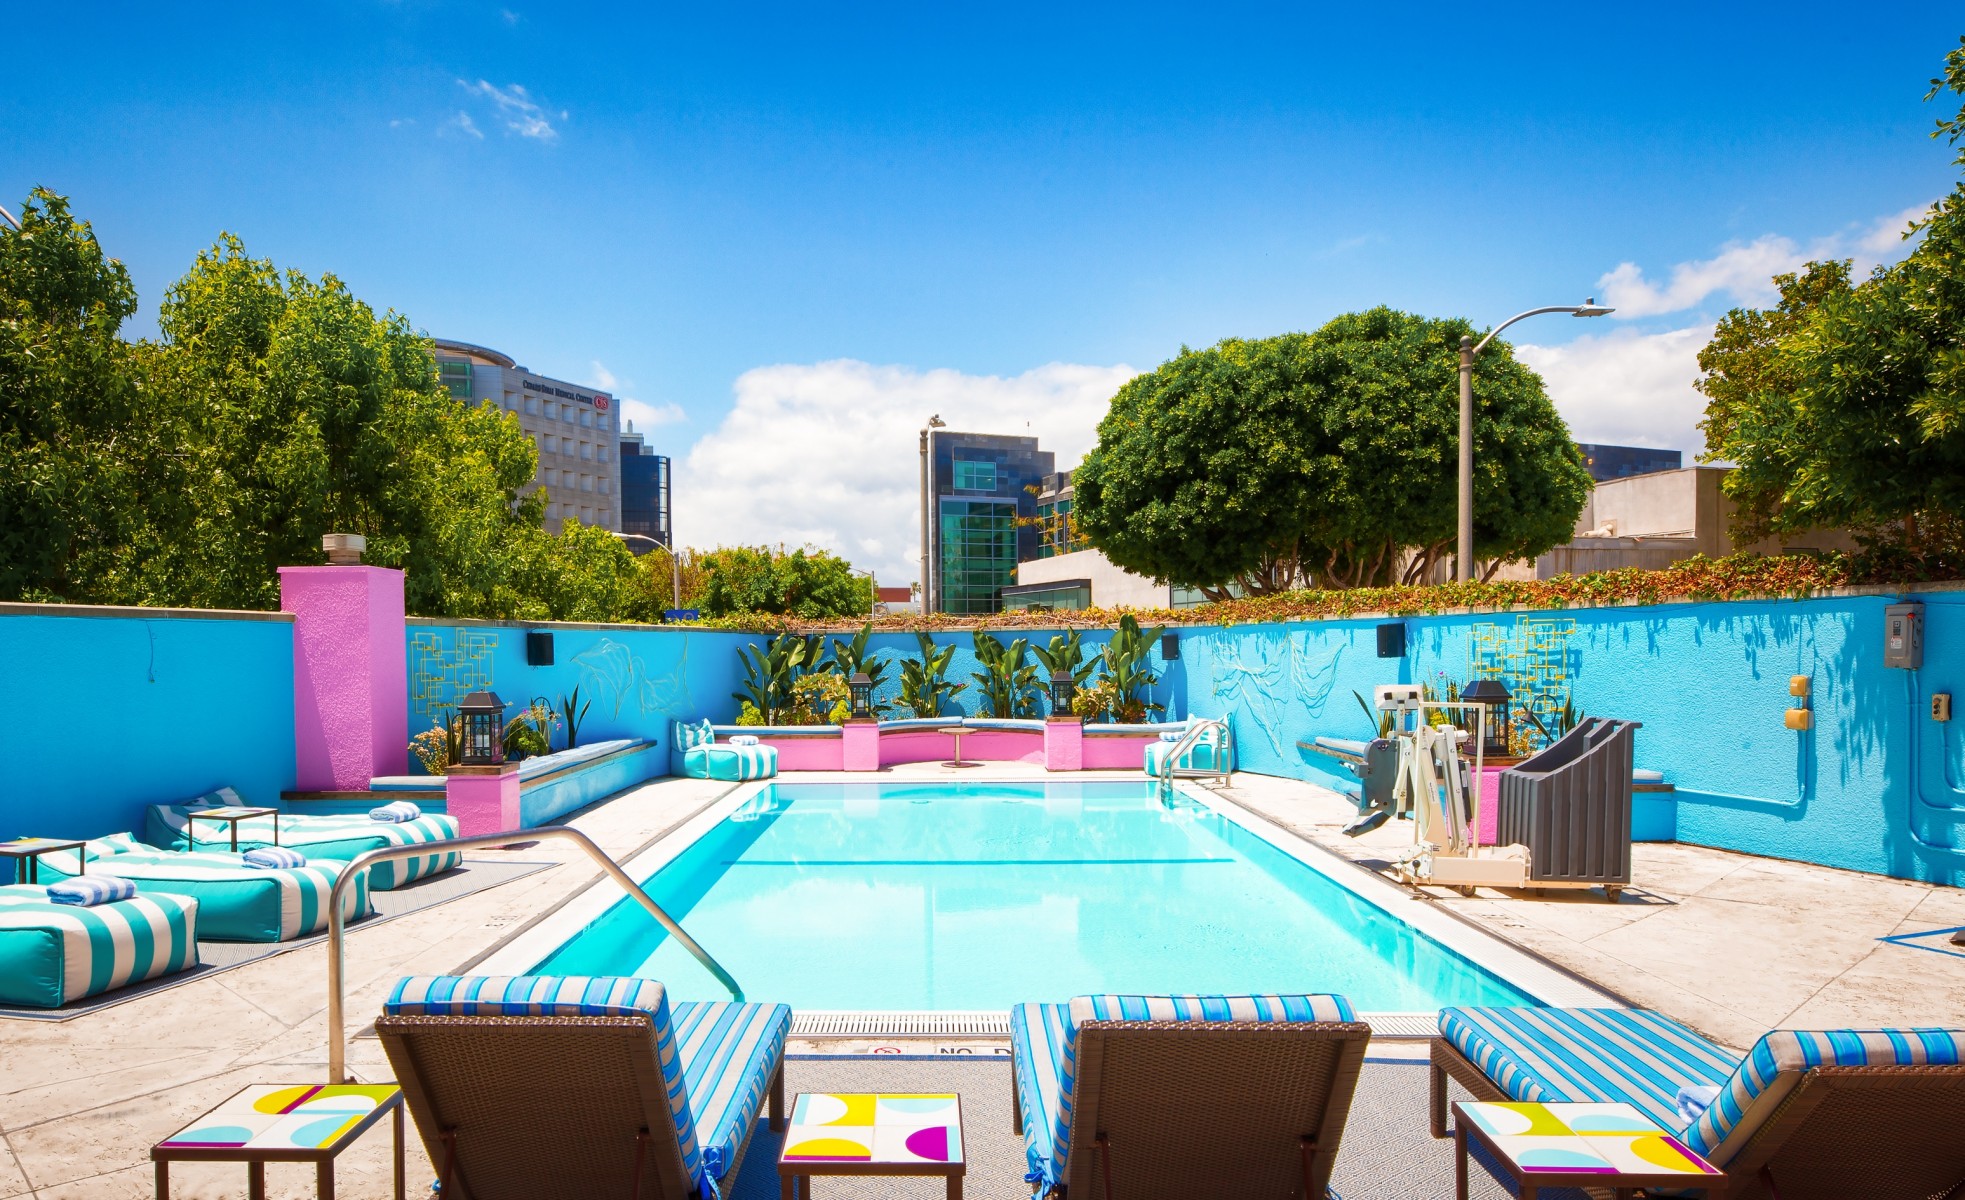 Photo of the hotel Sofitel Los Angeles at Beverly Hills: Img 4457 edited effect medium